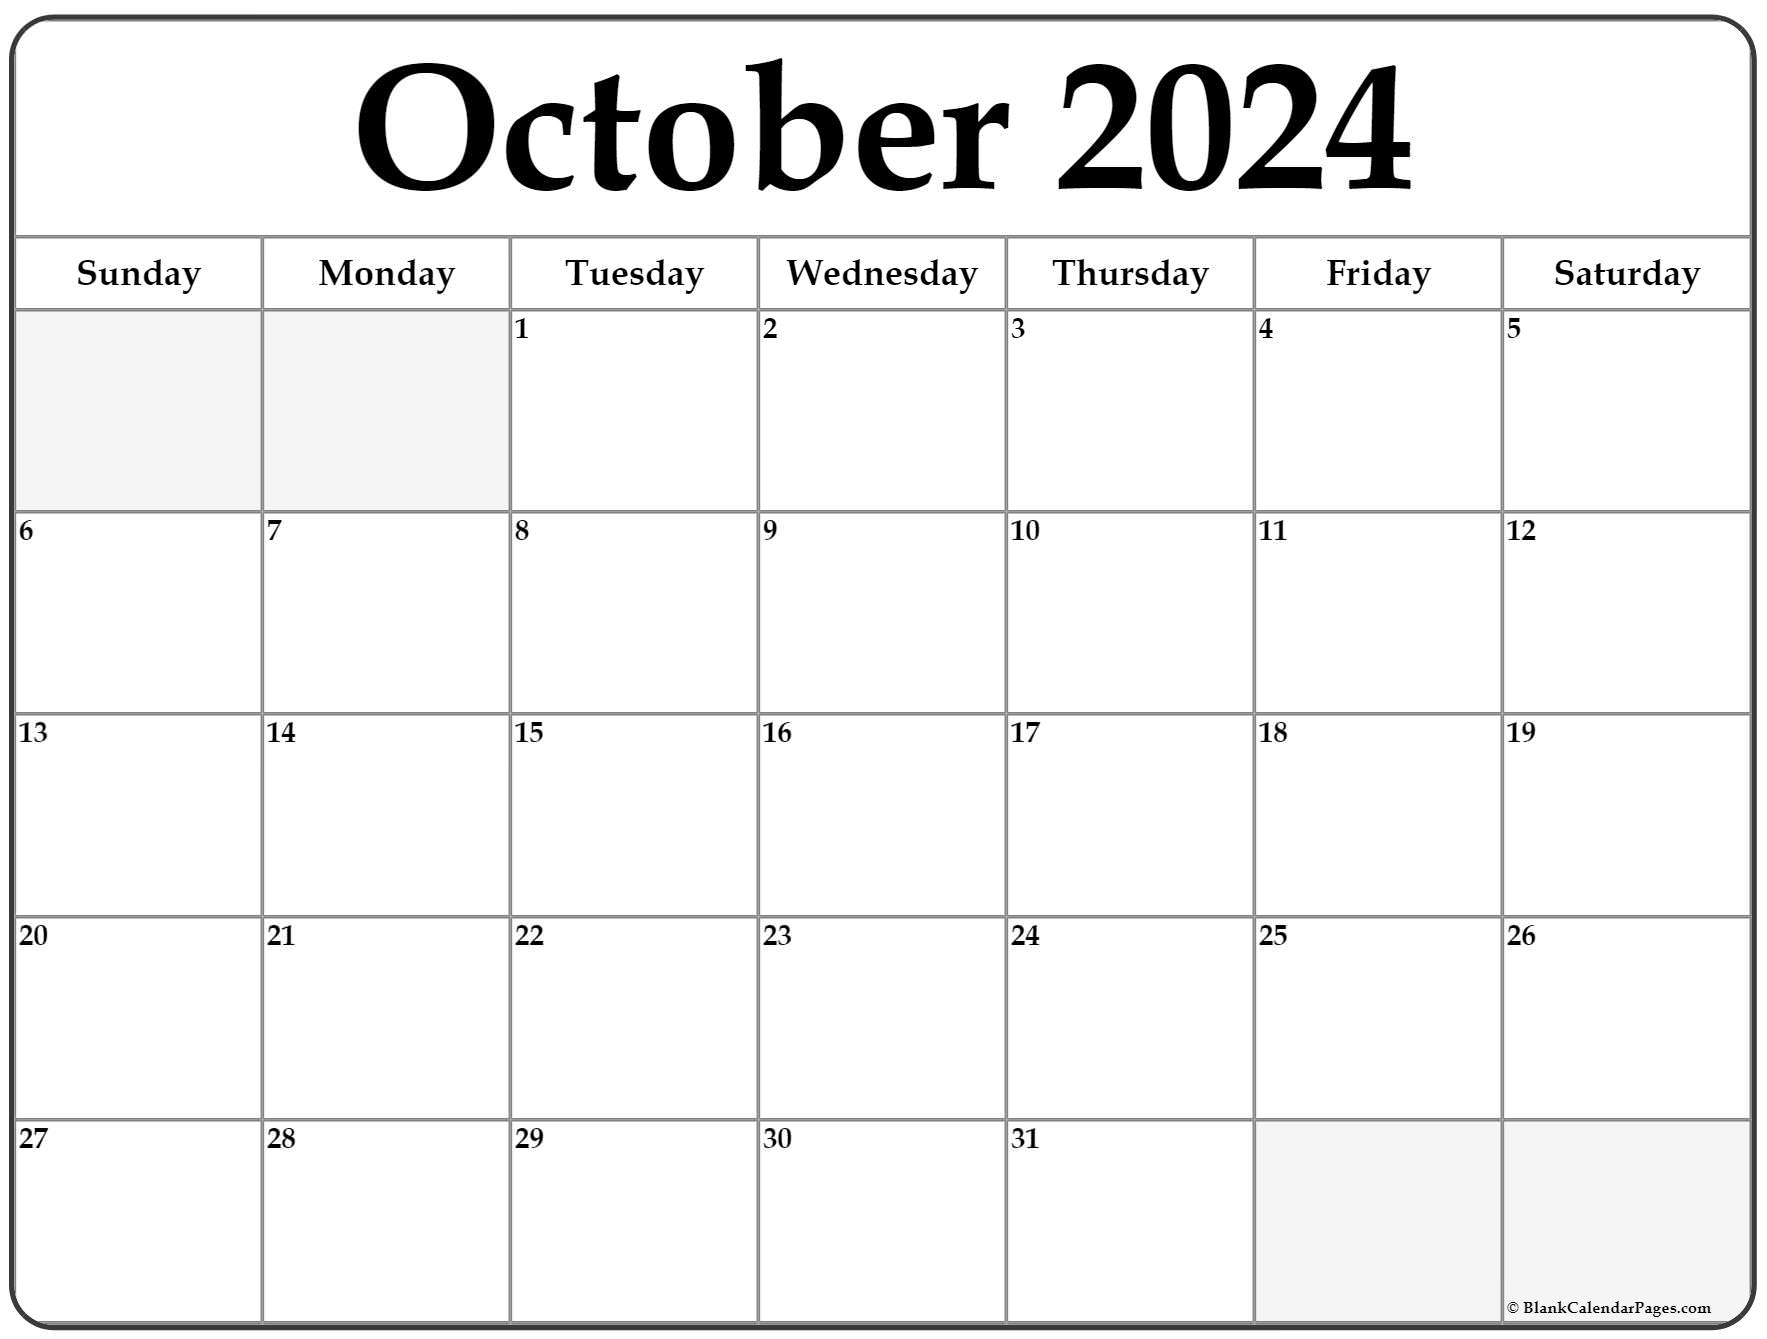 Free Printable Calendar For October 2022 October 2022 Calendar | Free Printable Calendar Templates